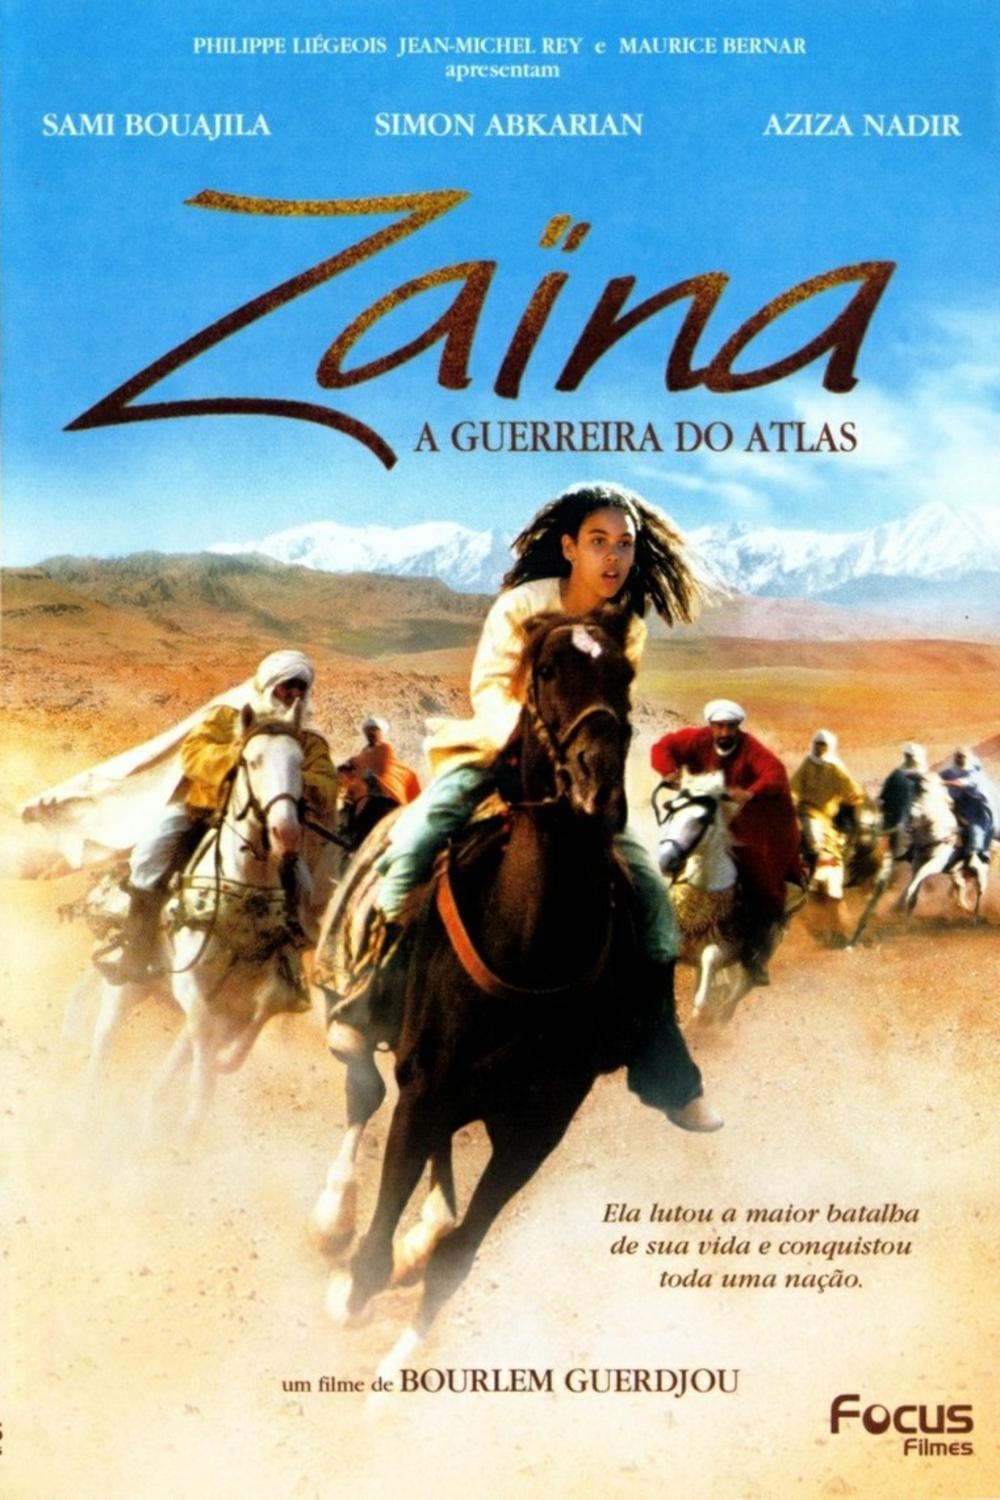 Caratula de ZAINA CAVALIERE DE L  ATLAS (Zaïna, cavaliere de l Atlas) 